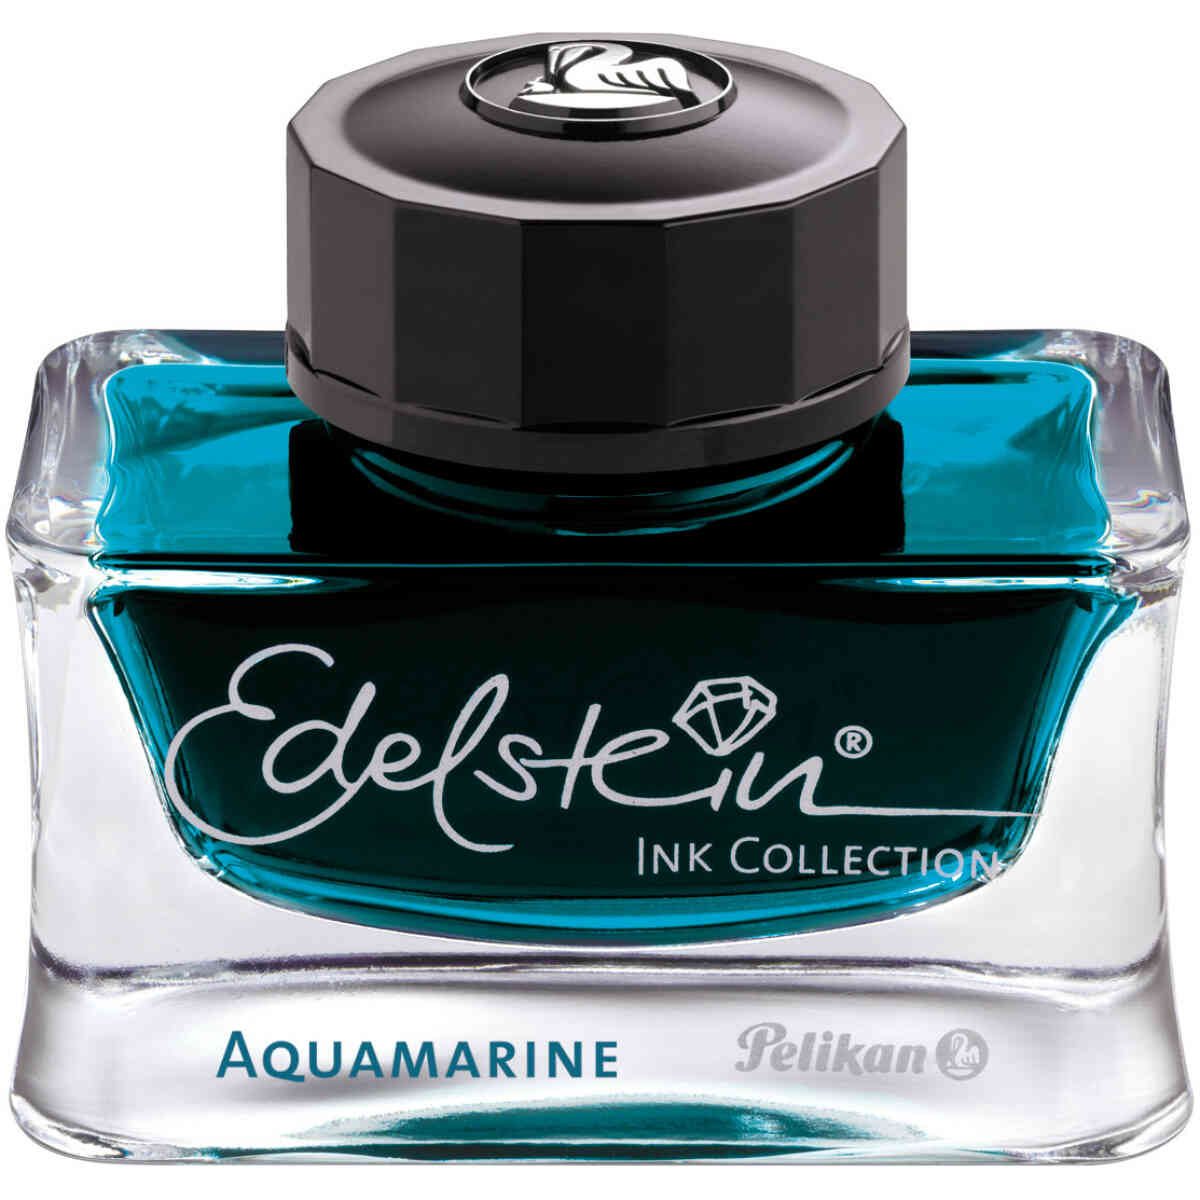 300025 EBD 01 2016 Edelstein Ink of the Year 2016 Aquamarine 38805 highres